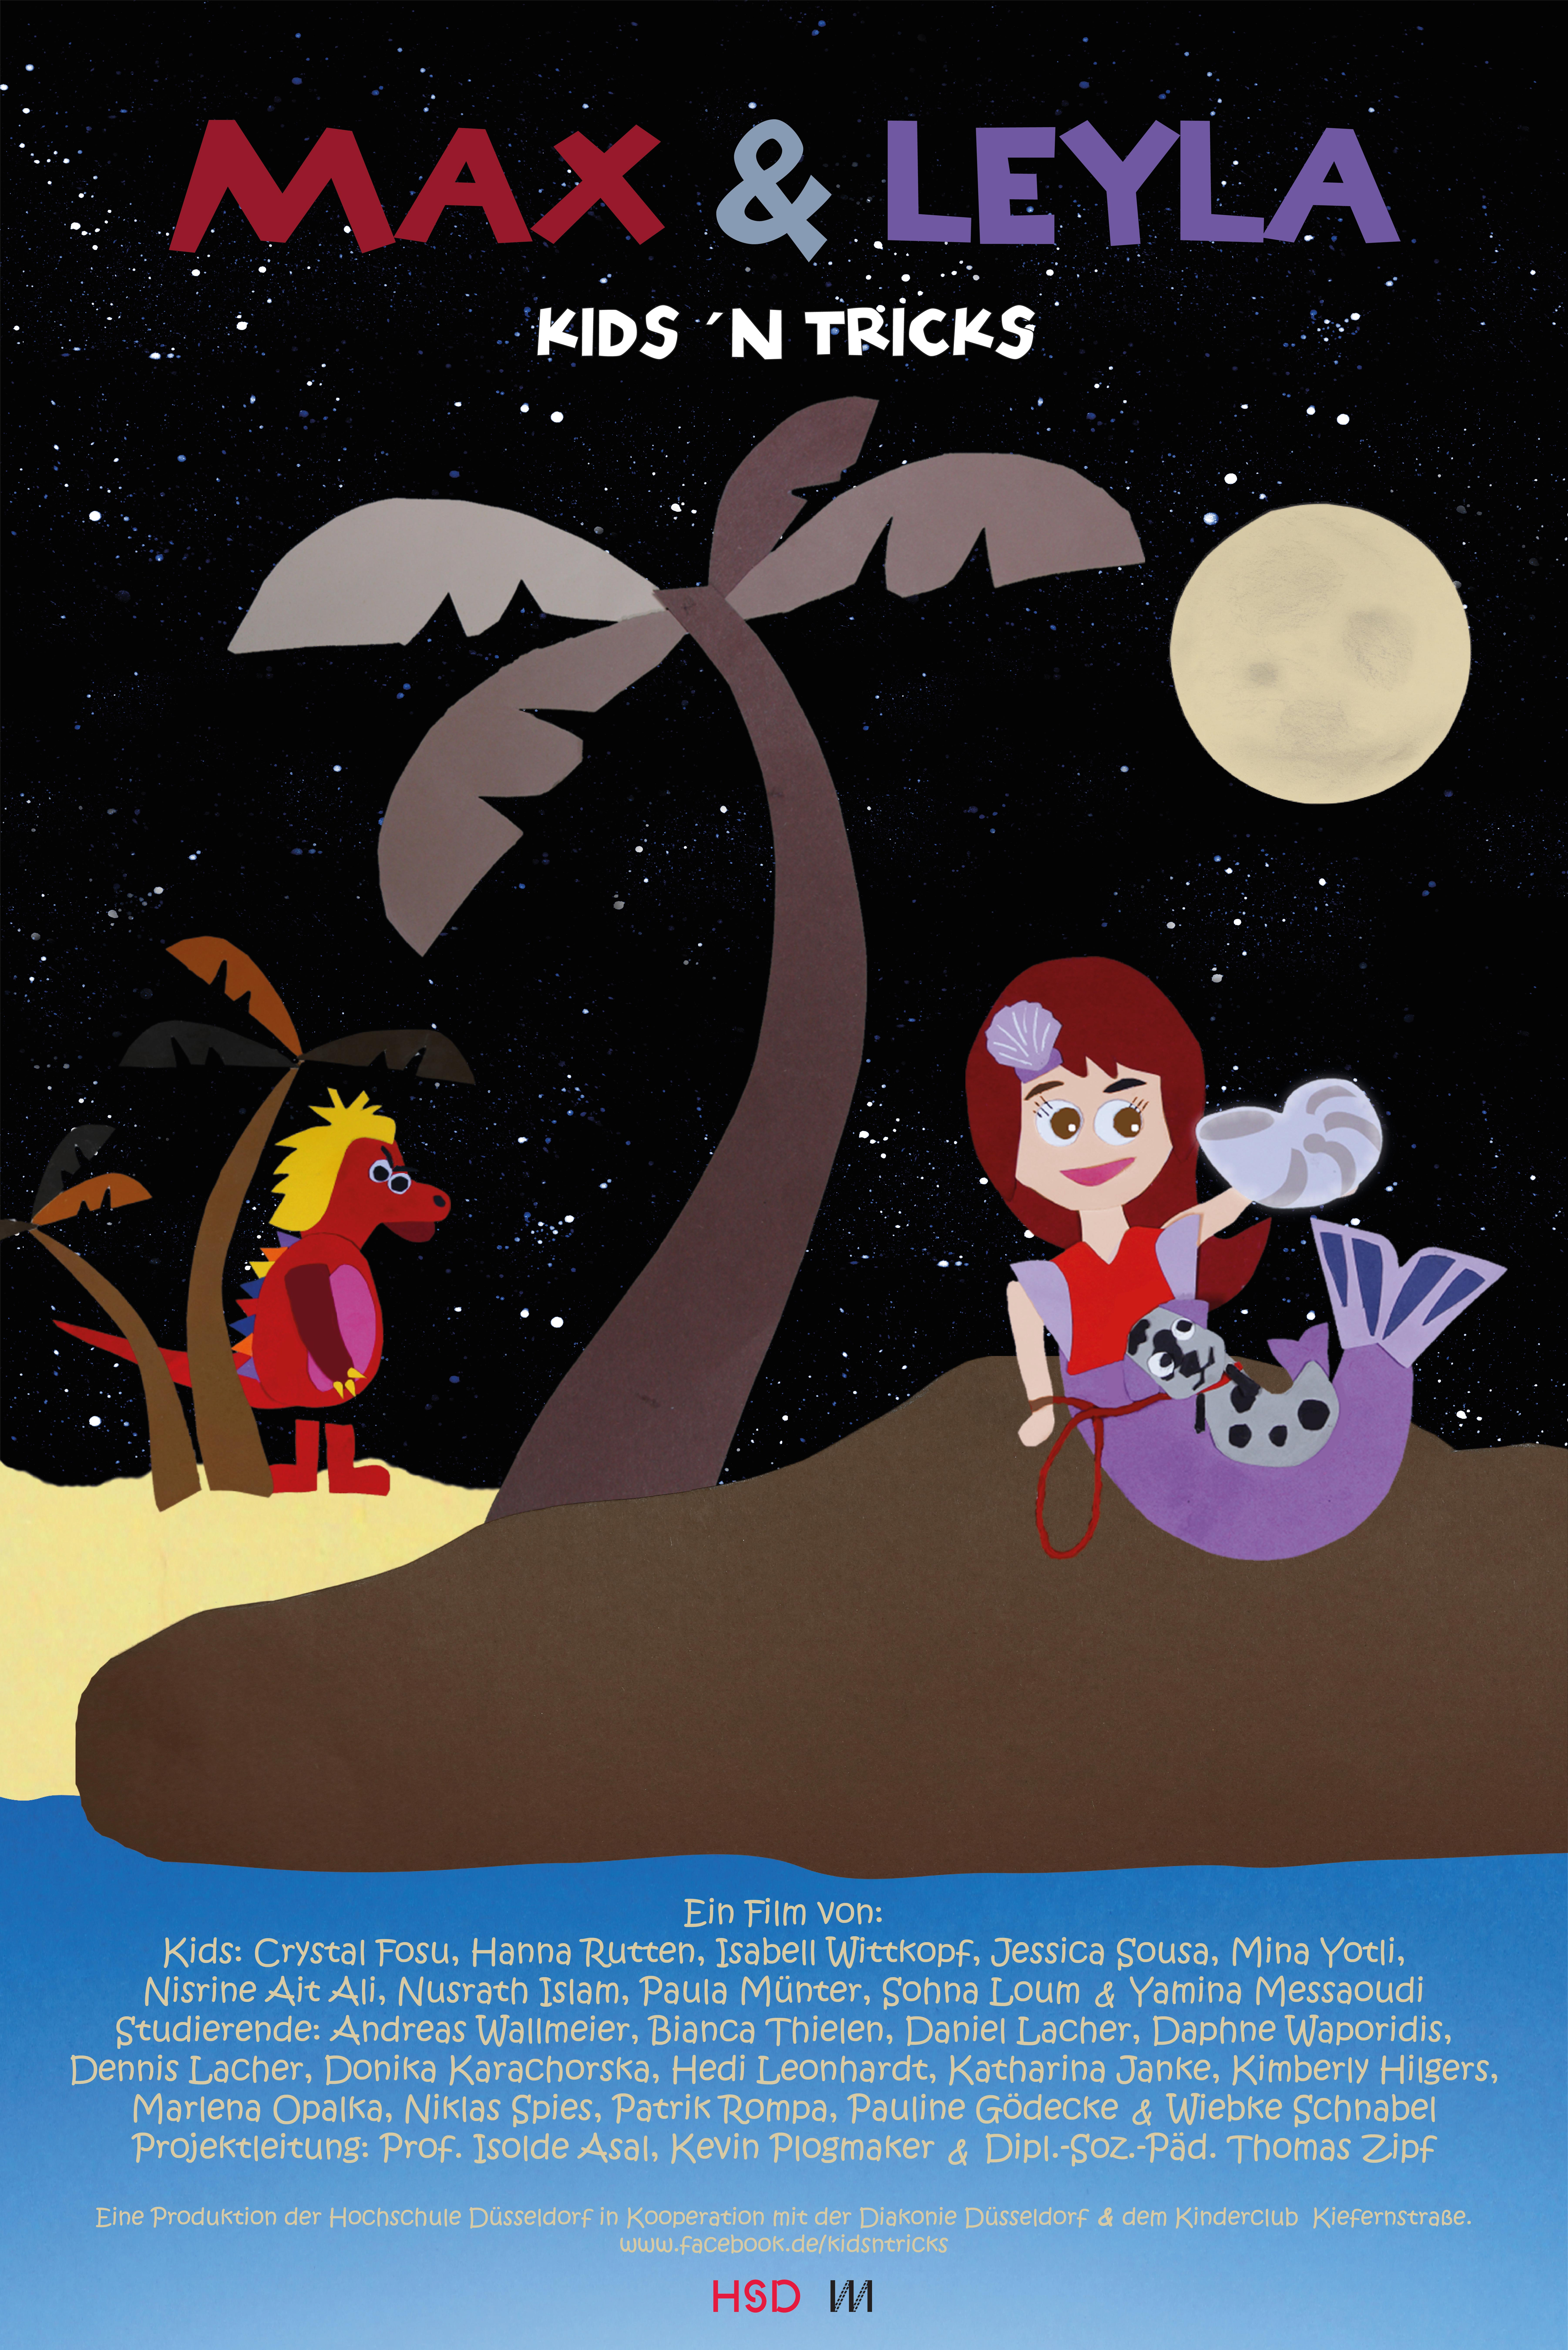 Kids'n Tricks: Max & Leyla Poster